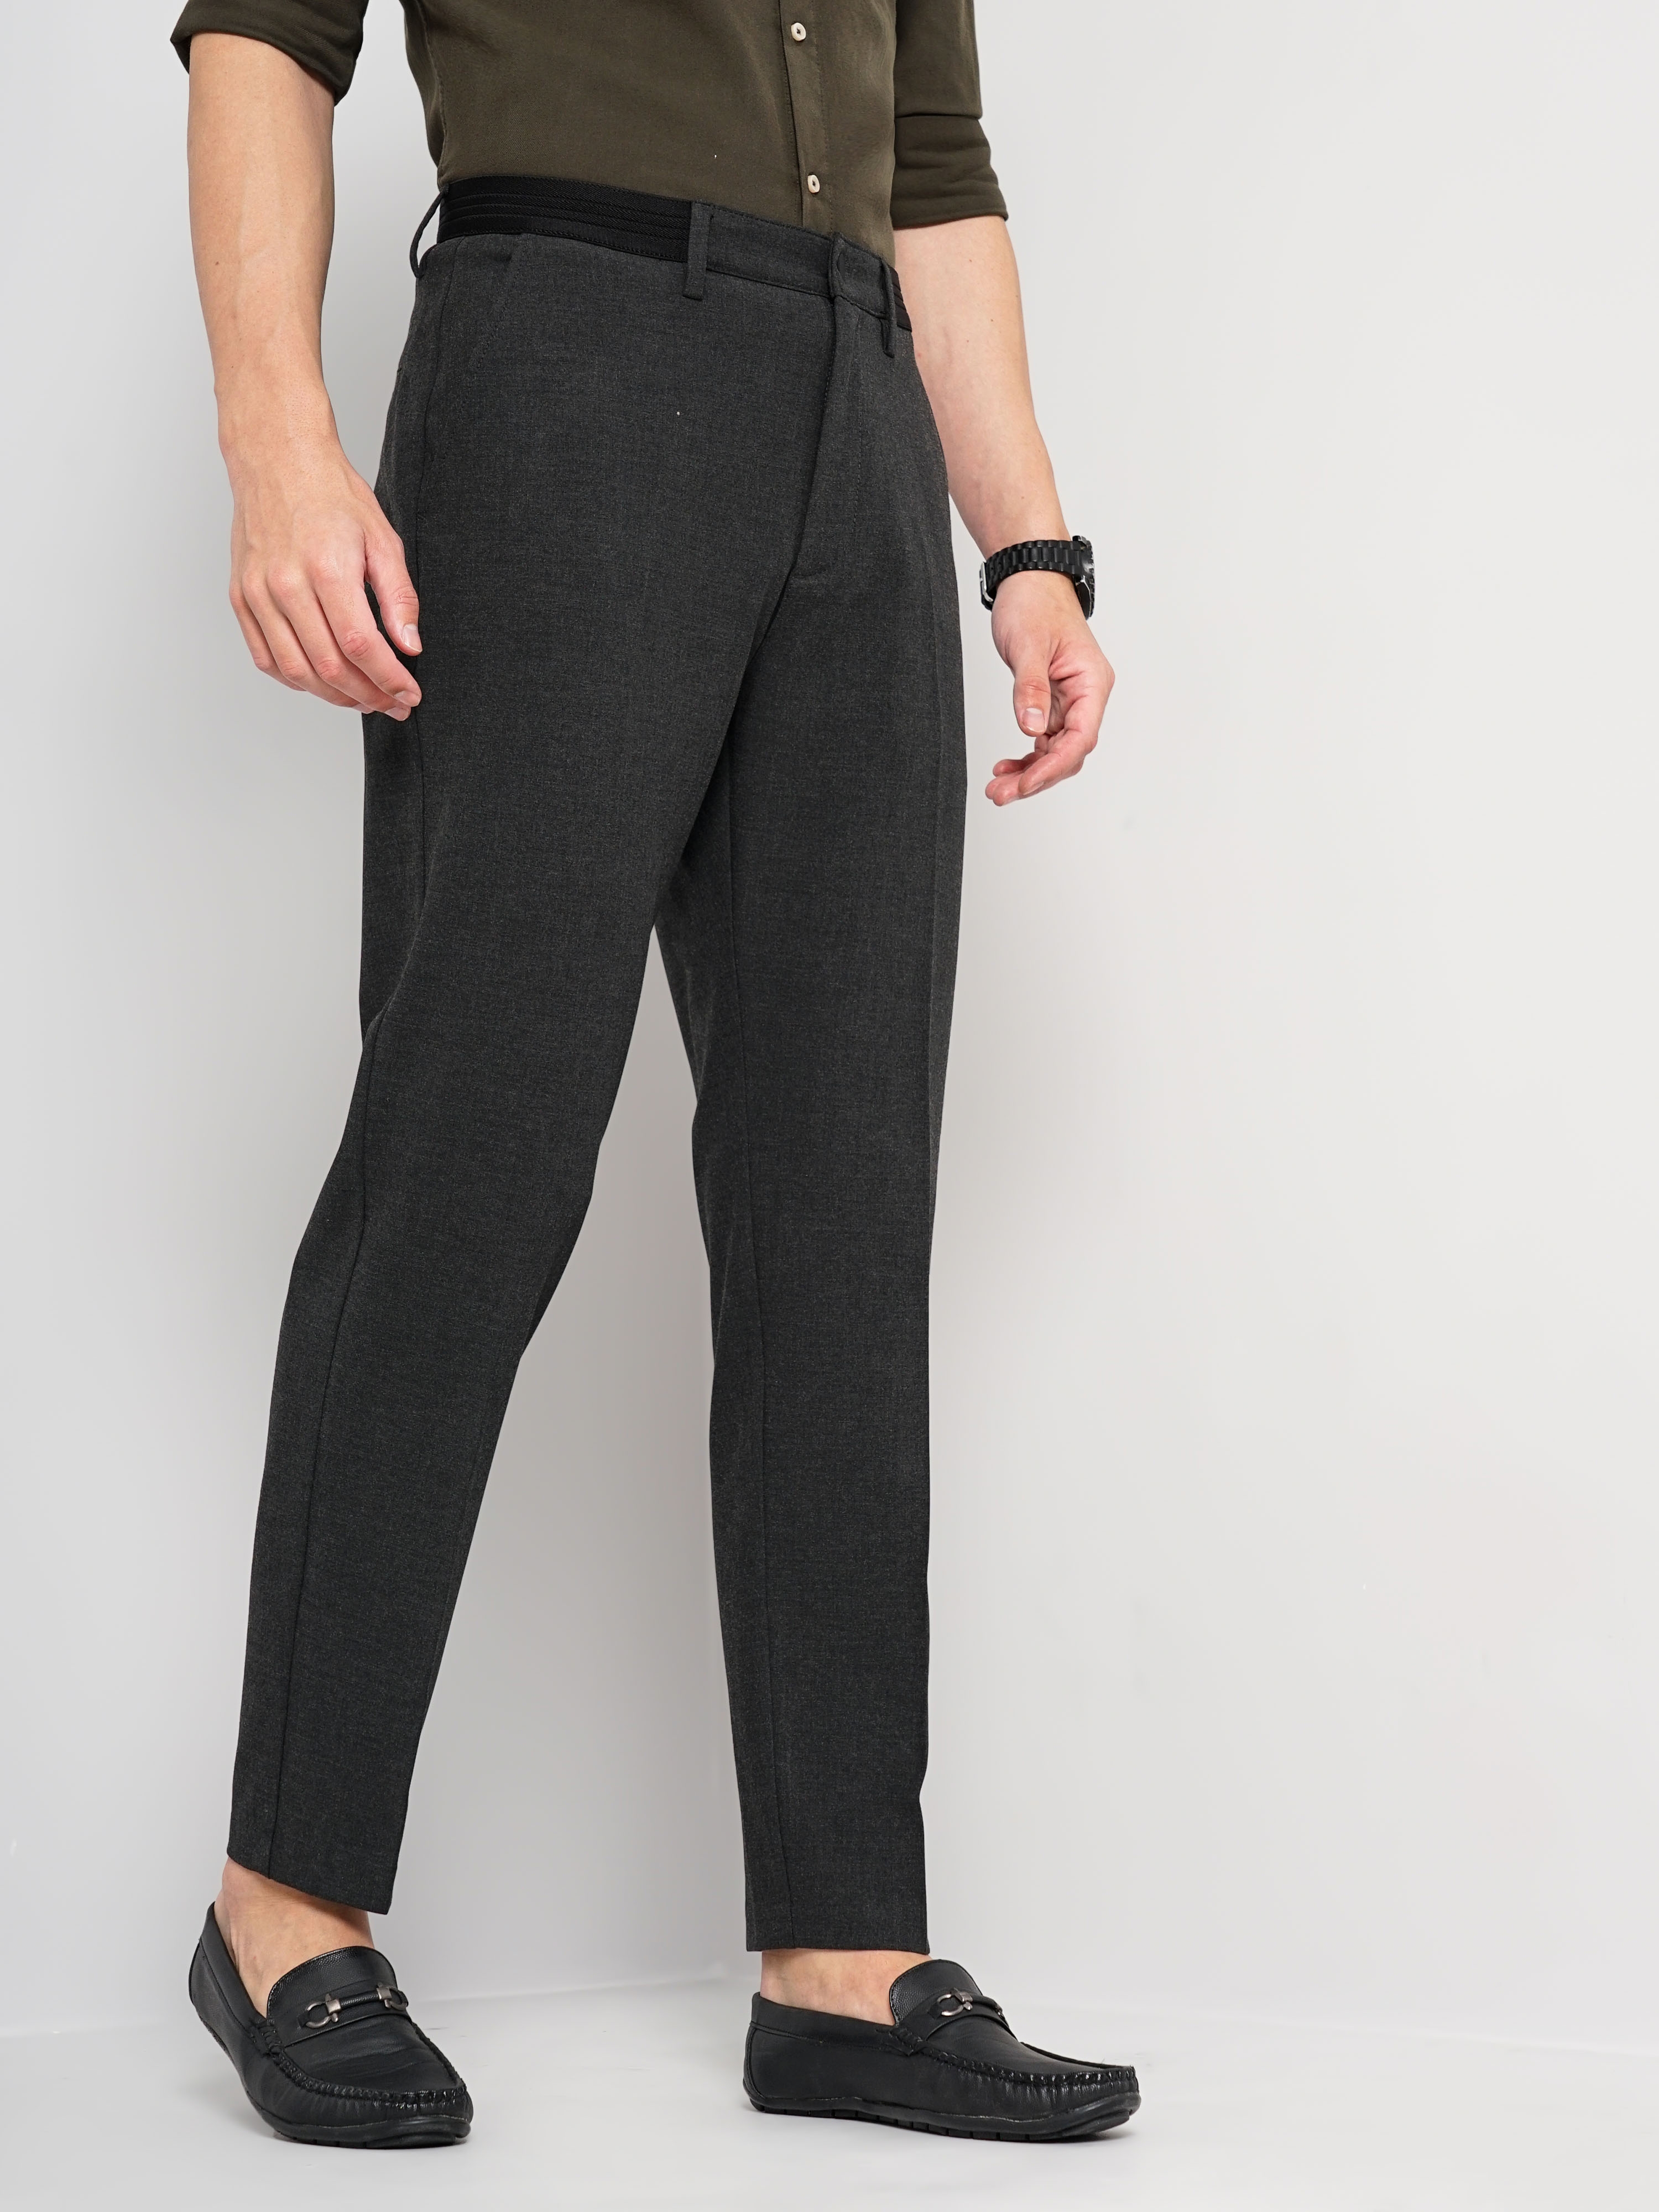 Buy Men Black Slim Fit Solid Casual Trousers Online - 749755 | Allen Solly